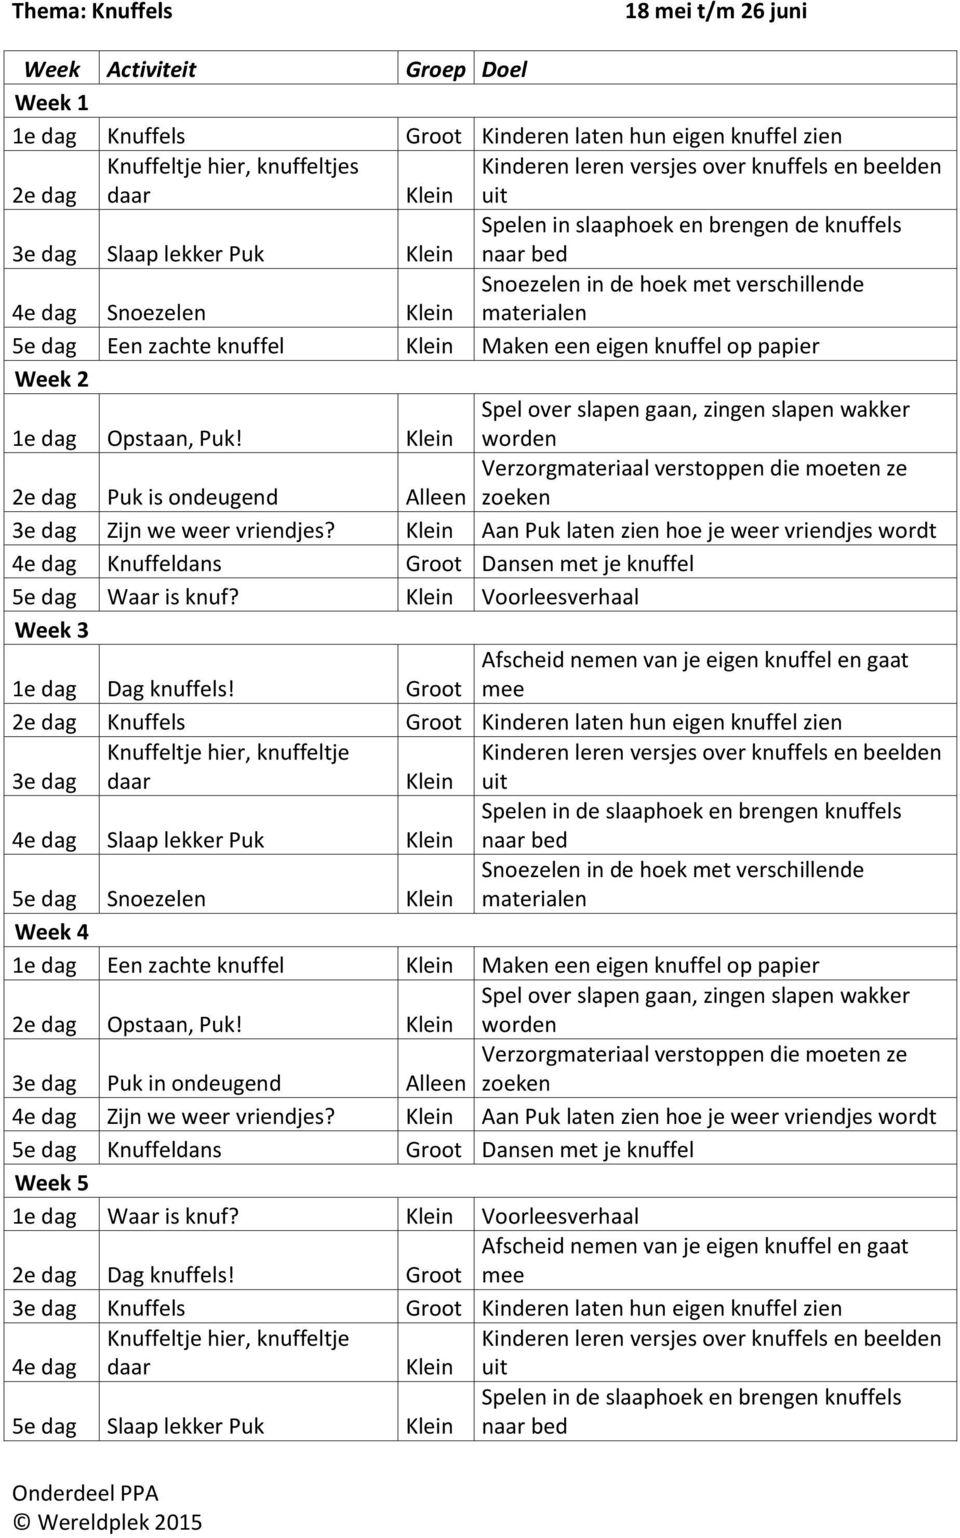 Hedendaags ACTIVITEITEN JAARPLAN 2015 KINDERDAGVERBLIJF WERELDPLEK - PDF Free QJ-69